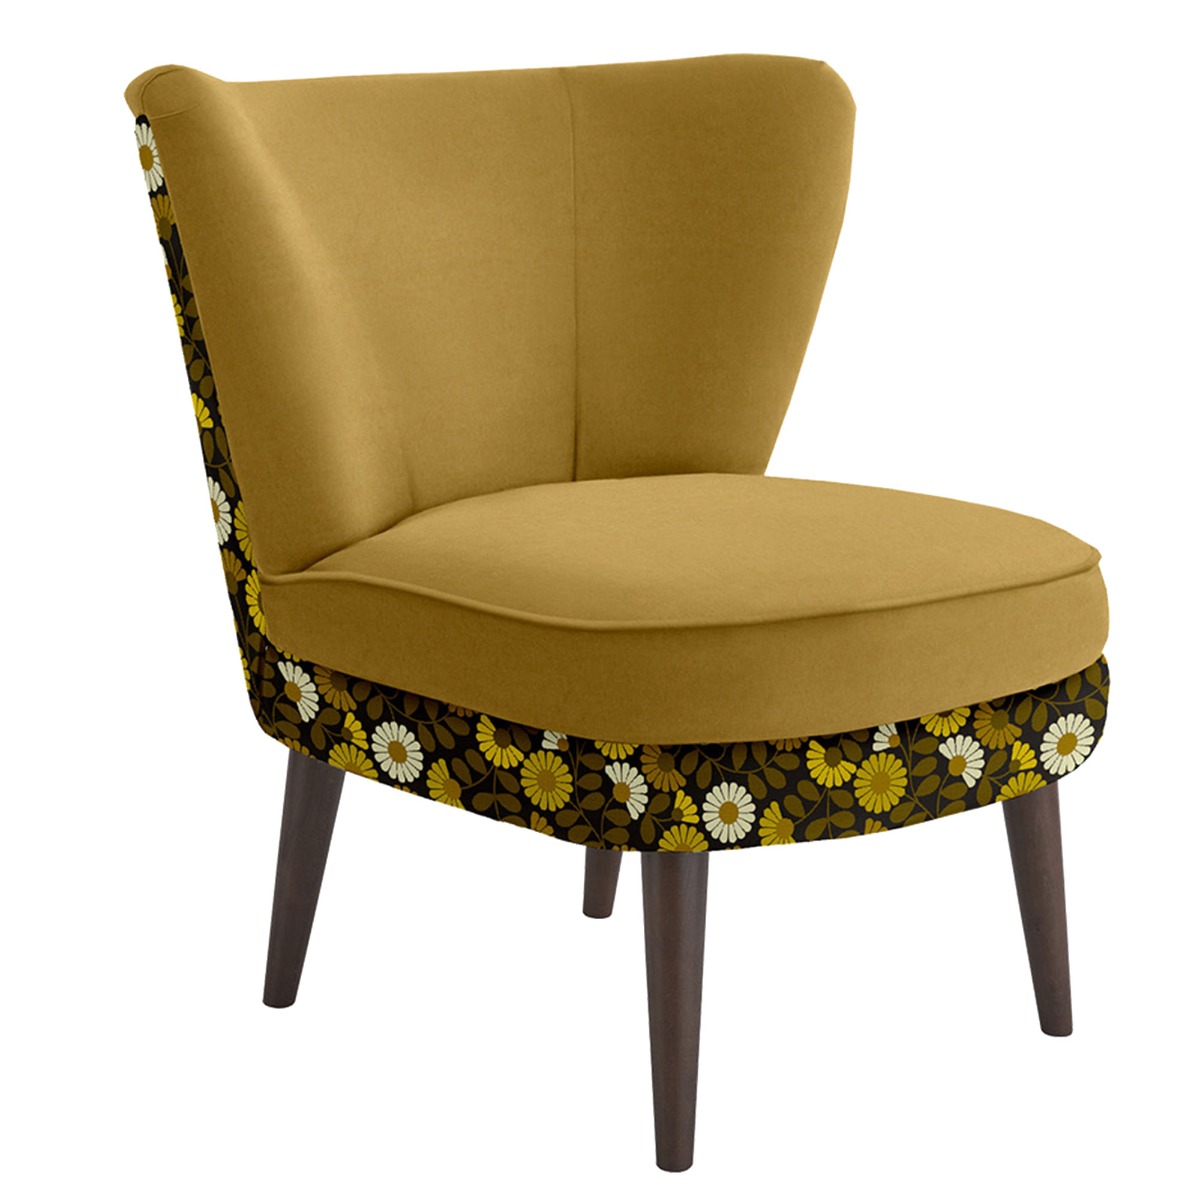 Orla Kiely Una Chair, Yellow Fabric | Barker & Stonehouse